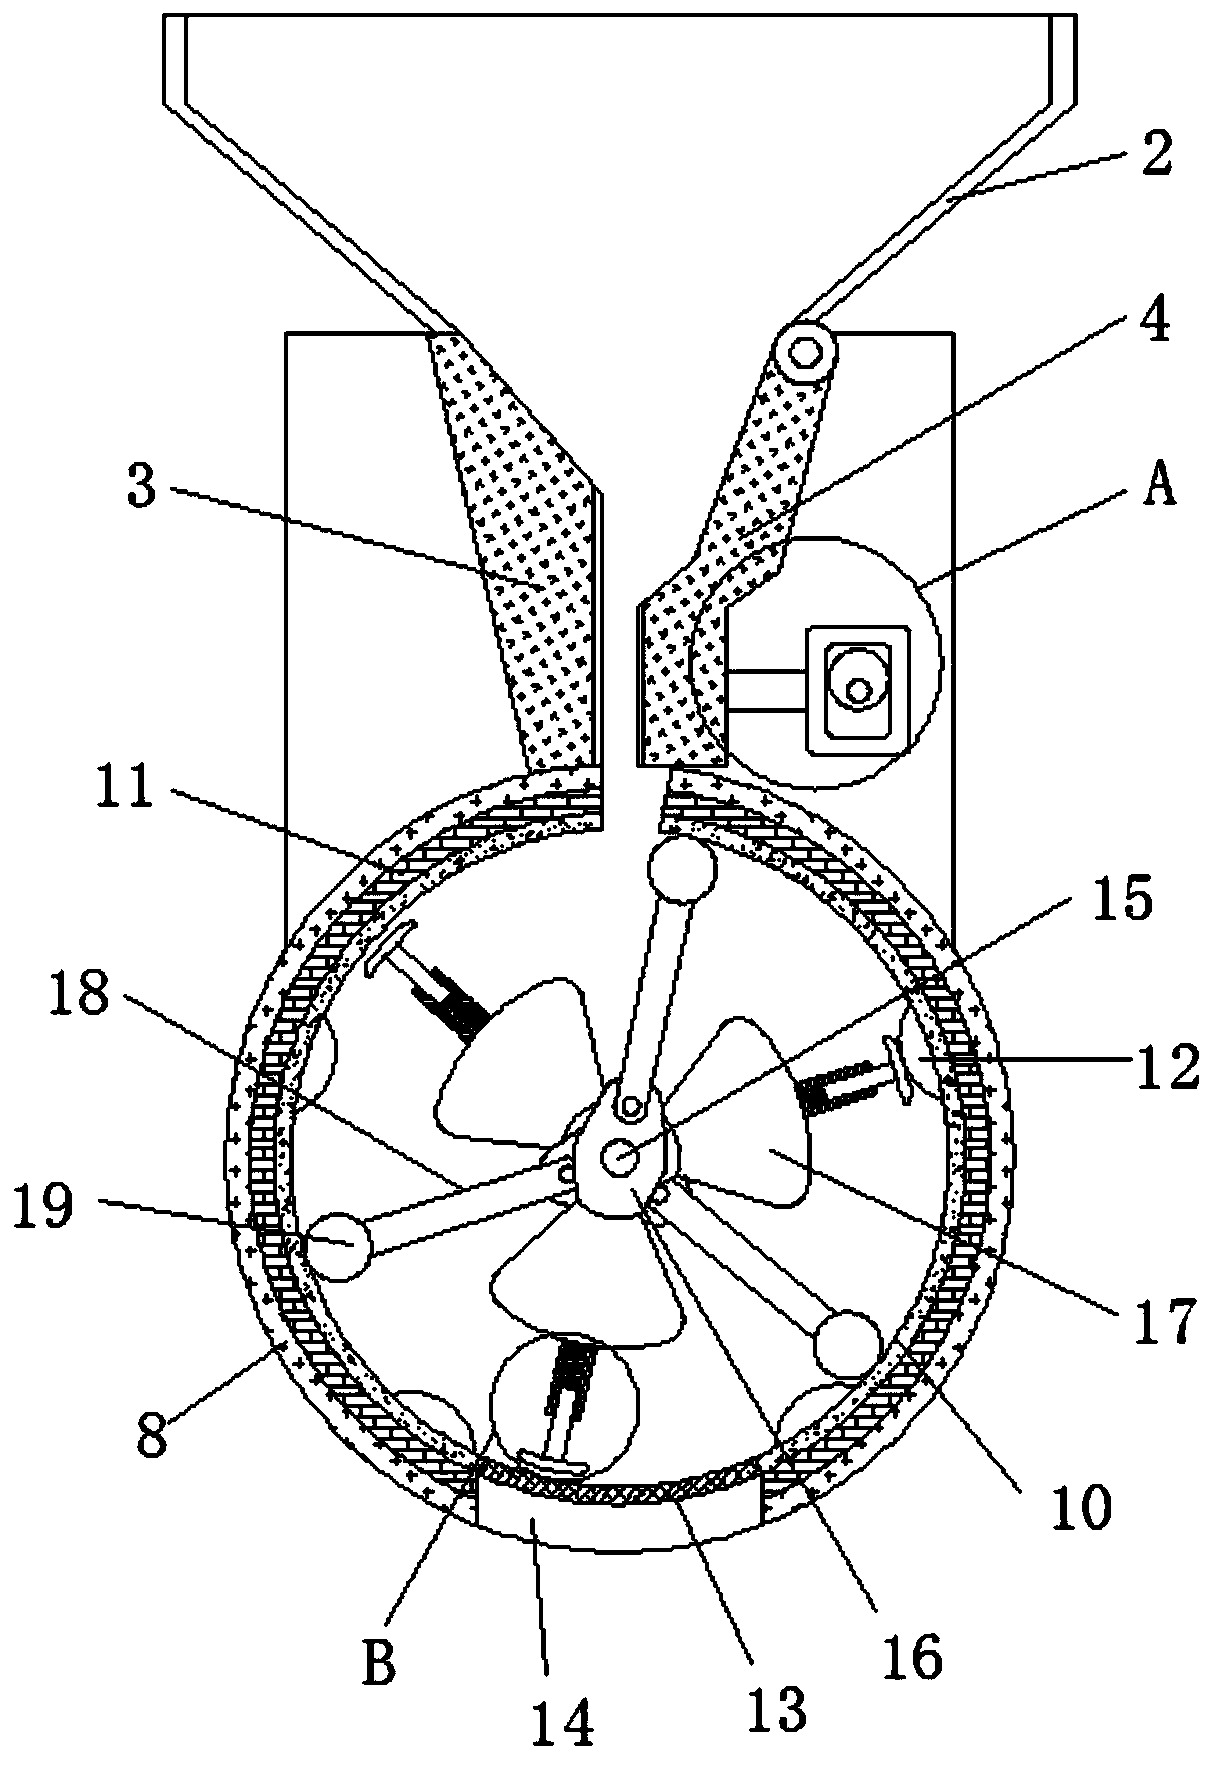 Novel material crushing device using rotational centrifugal force principle